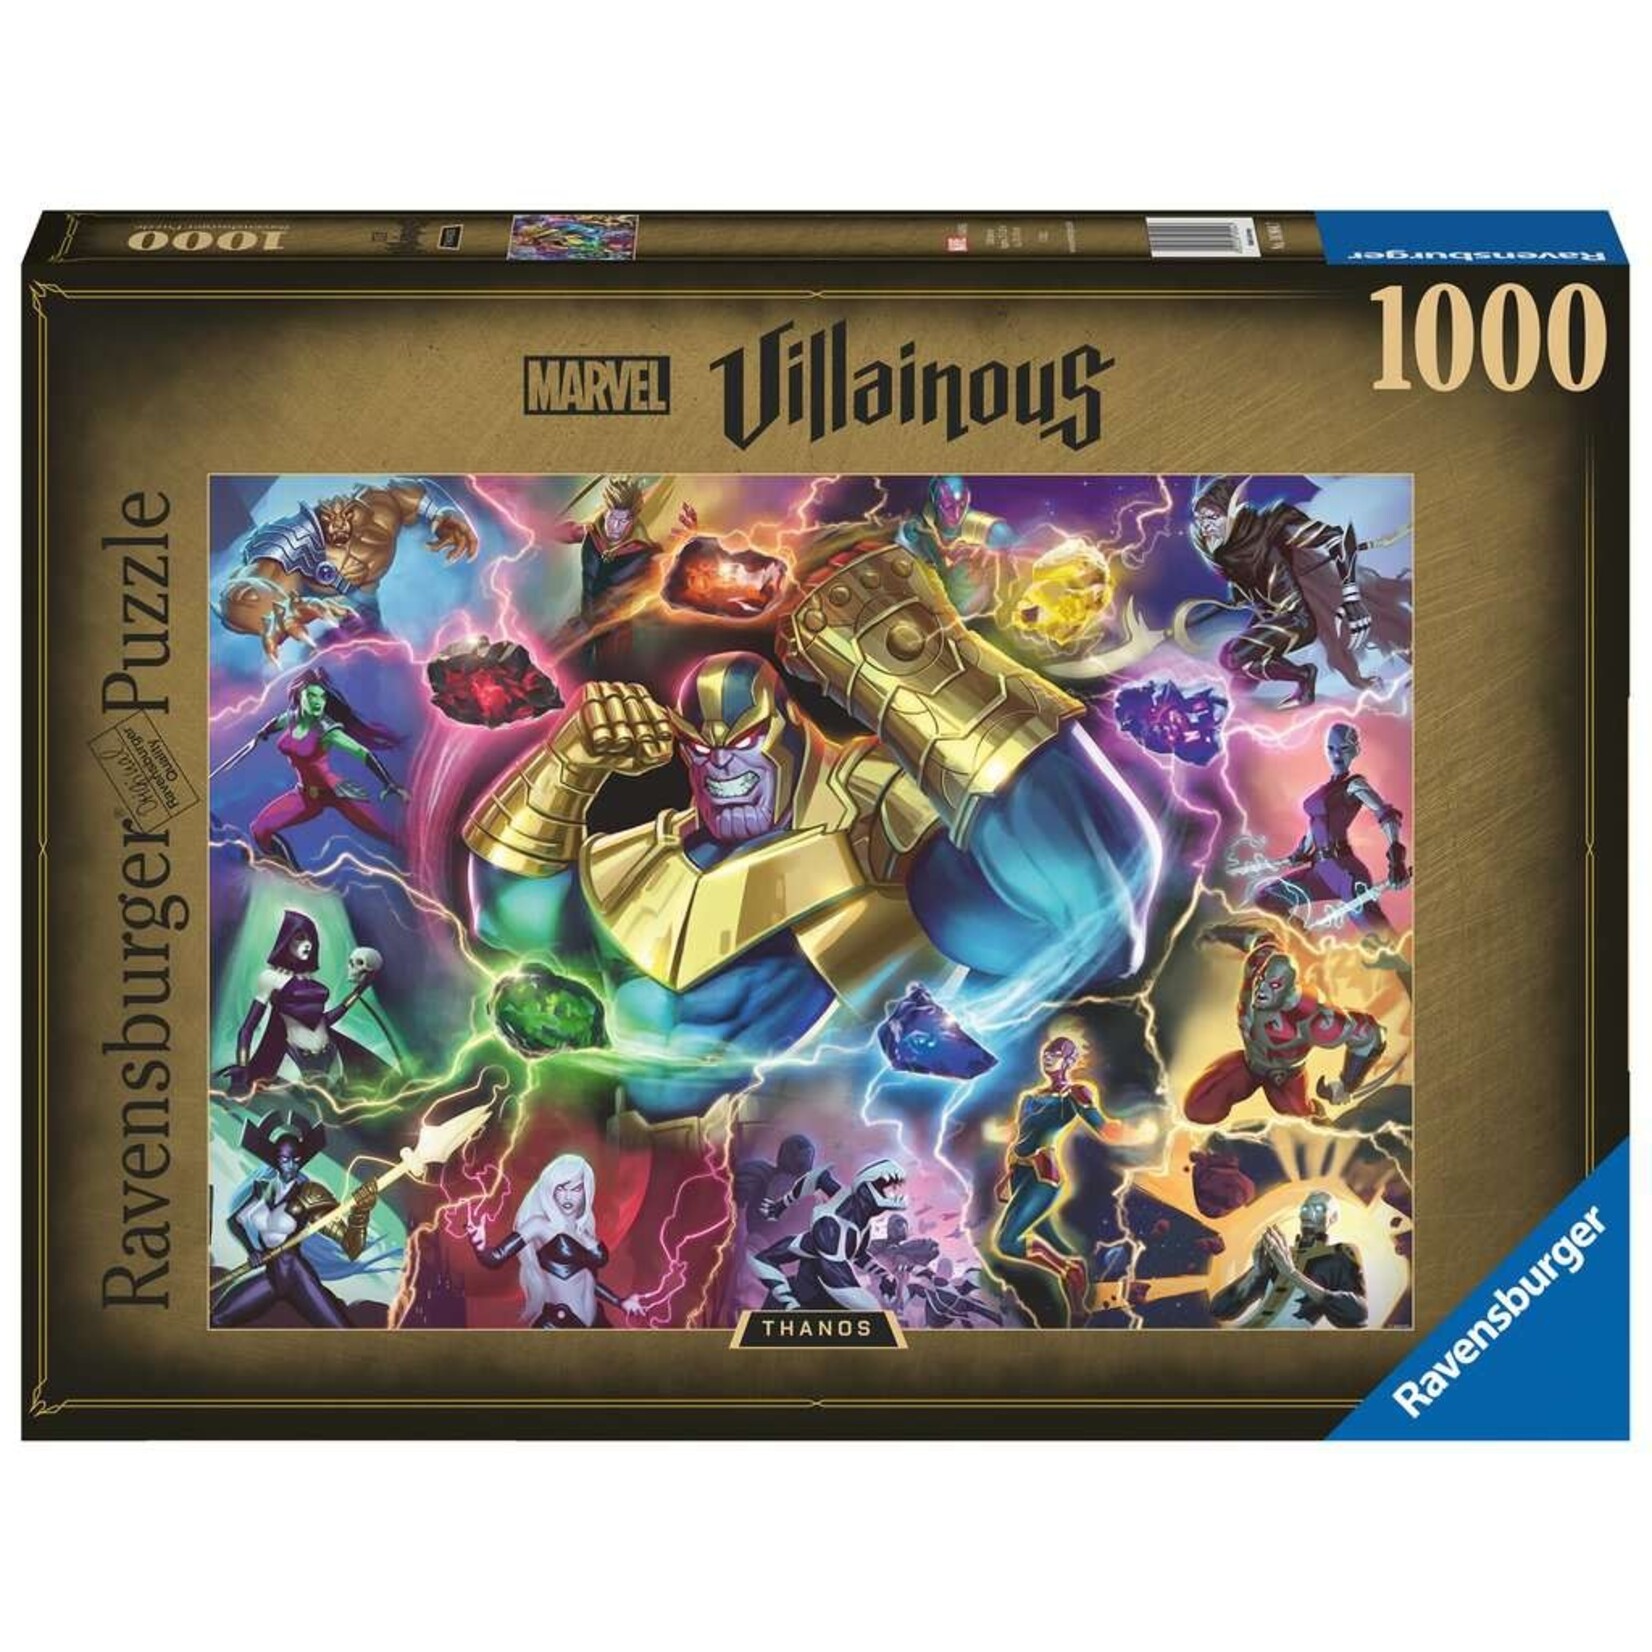 Ravensburger Ravensburger Puzzle Marvel Villainous: Thanos 1000 pcs